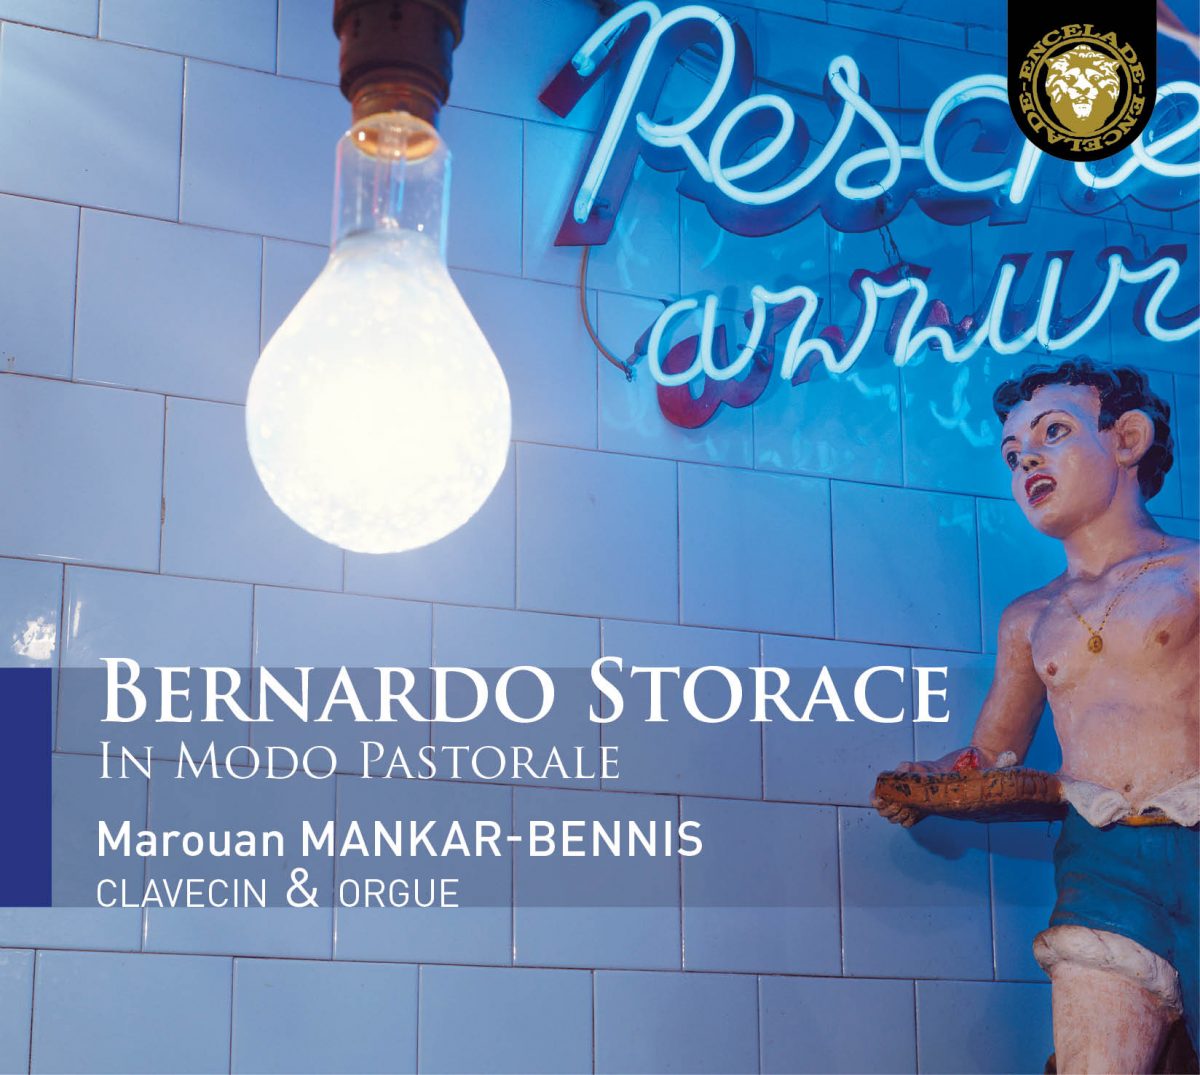 Bernardo Storace in modo pastorale Marouan Mankar-Bennis